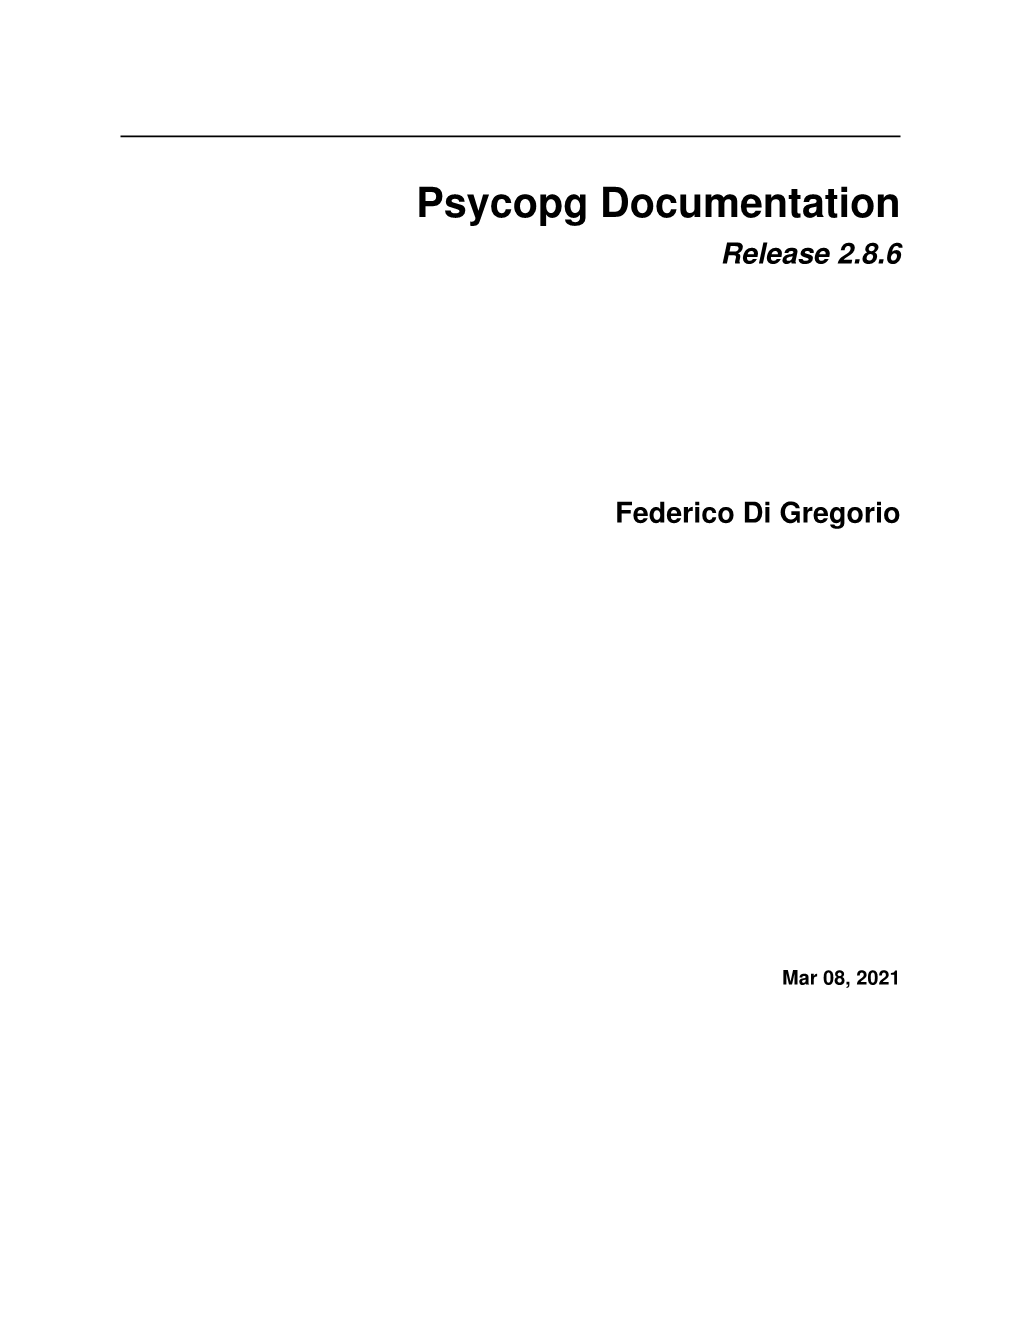 Psycopg Documentation Release 2.8.6